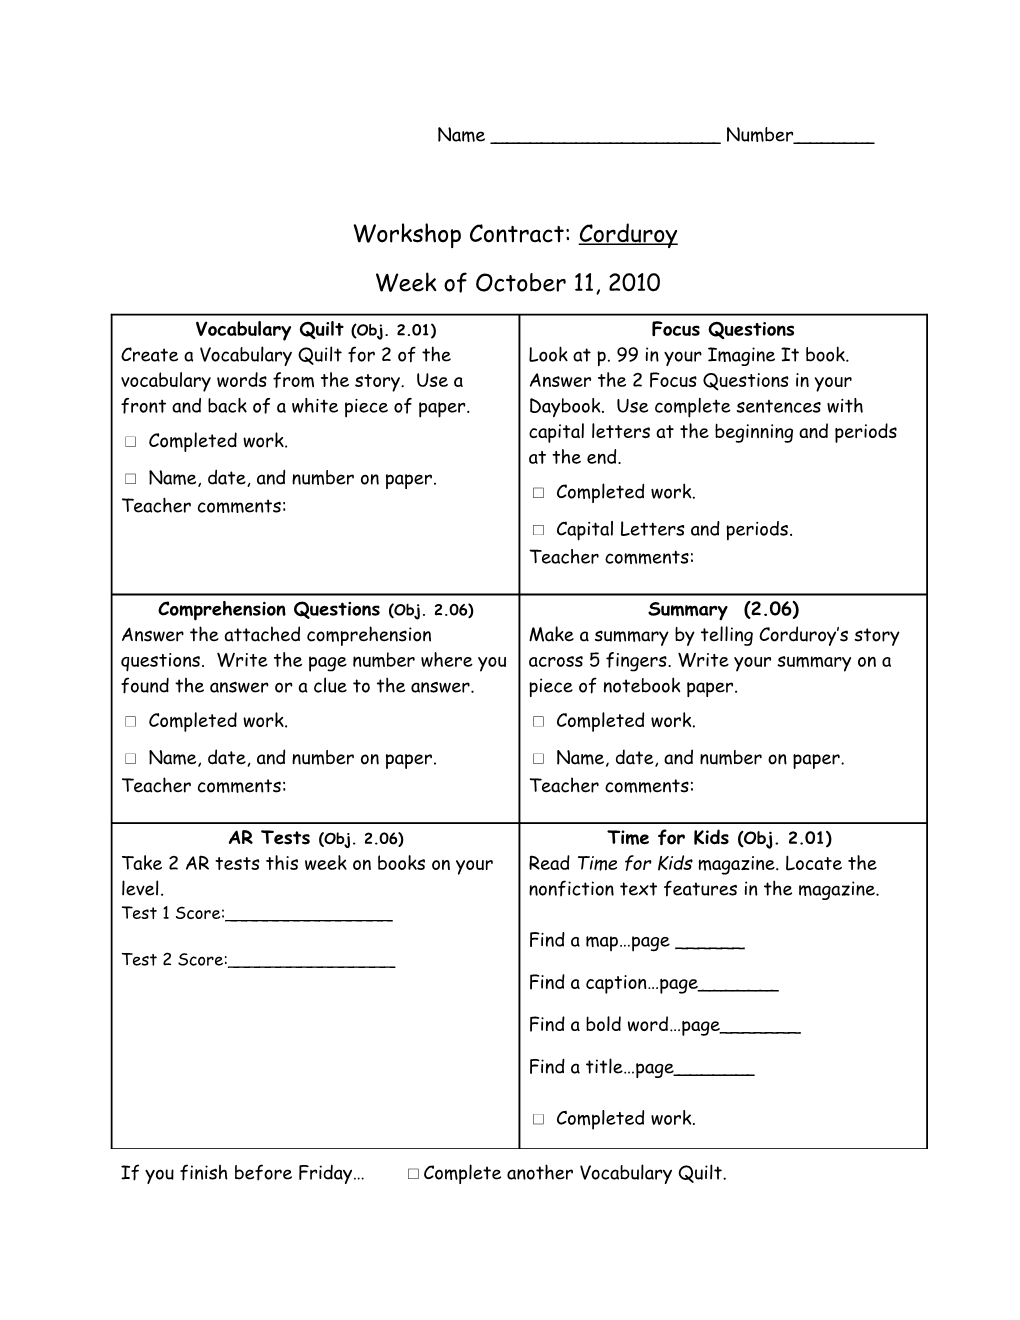 Workshop Contract: Corduroy